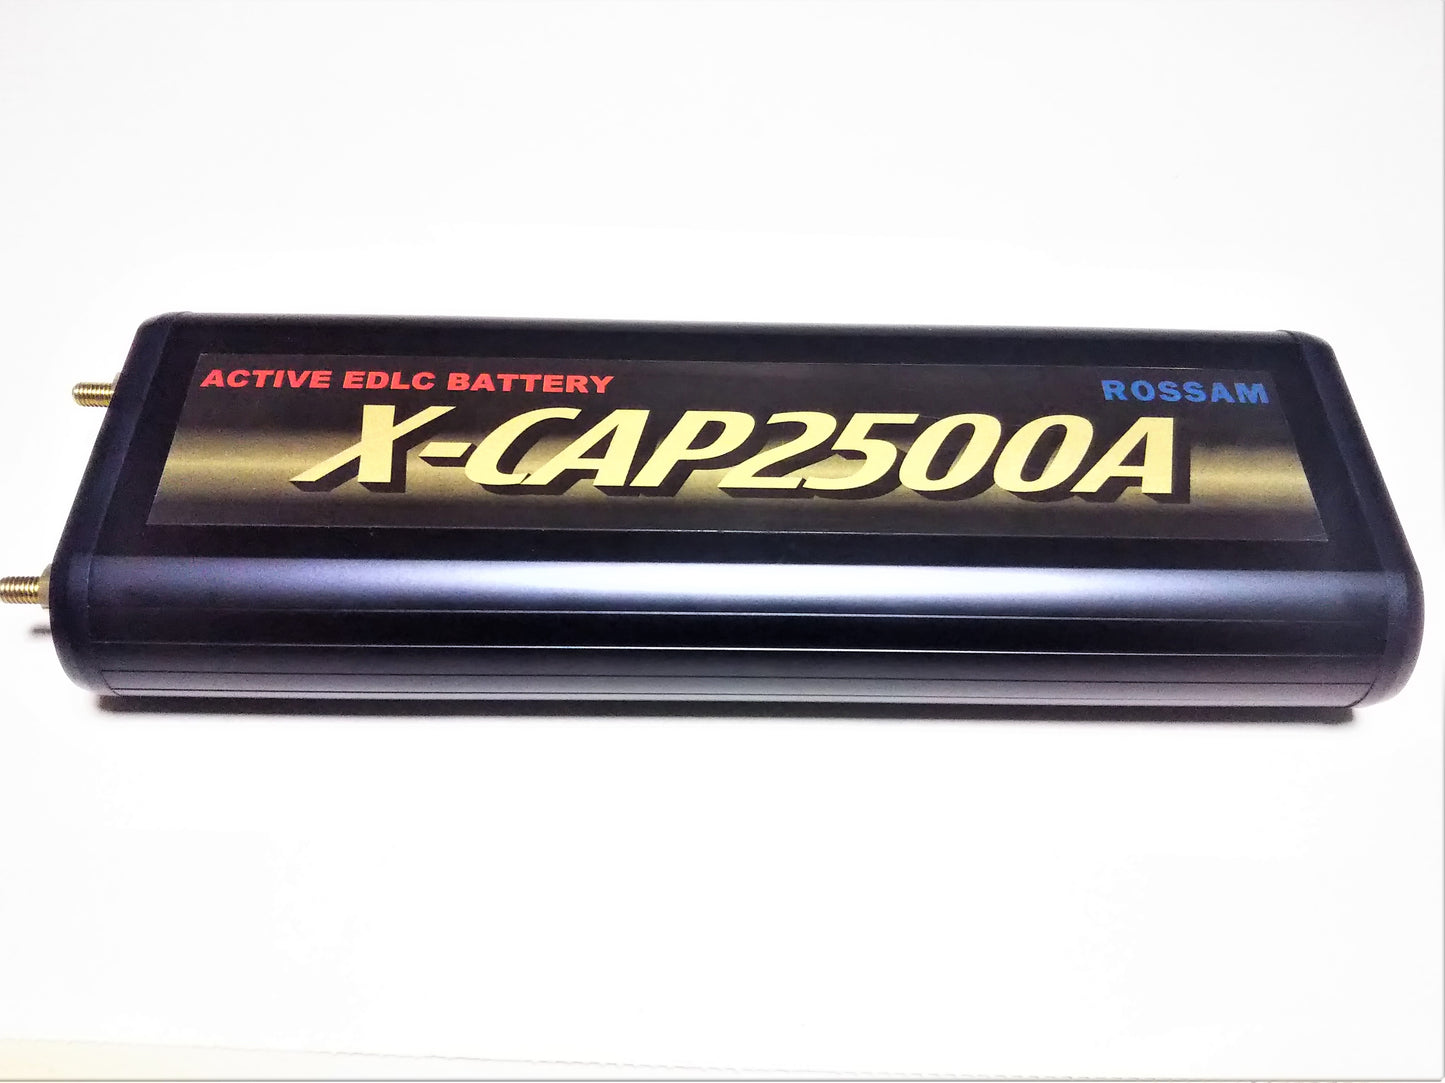 X-CAP2500A 型号附带电压表 ActiveEDLC 采用 ROSSAM